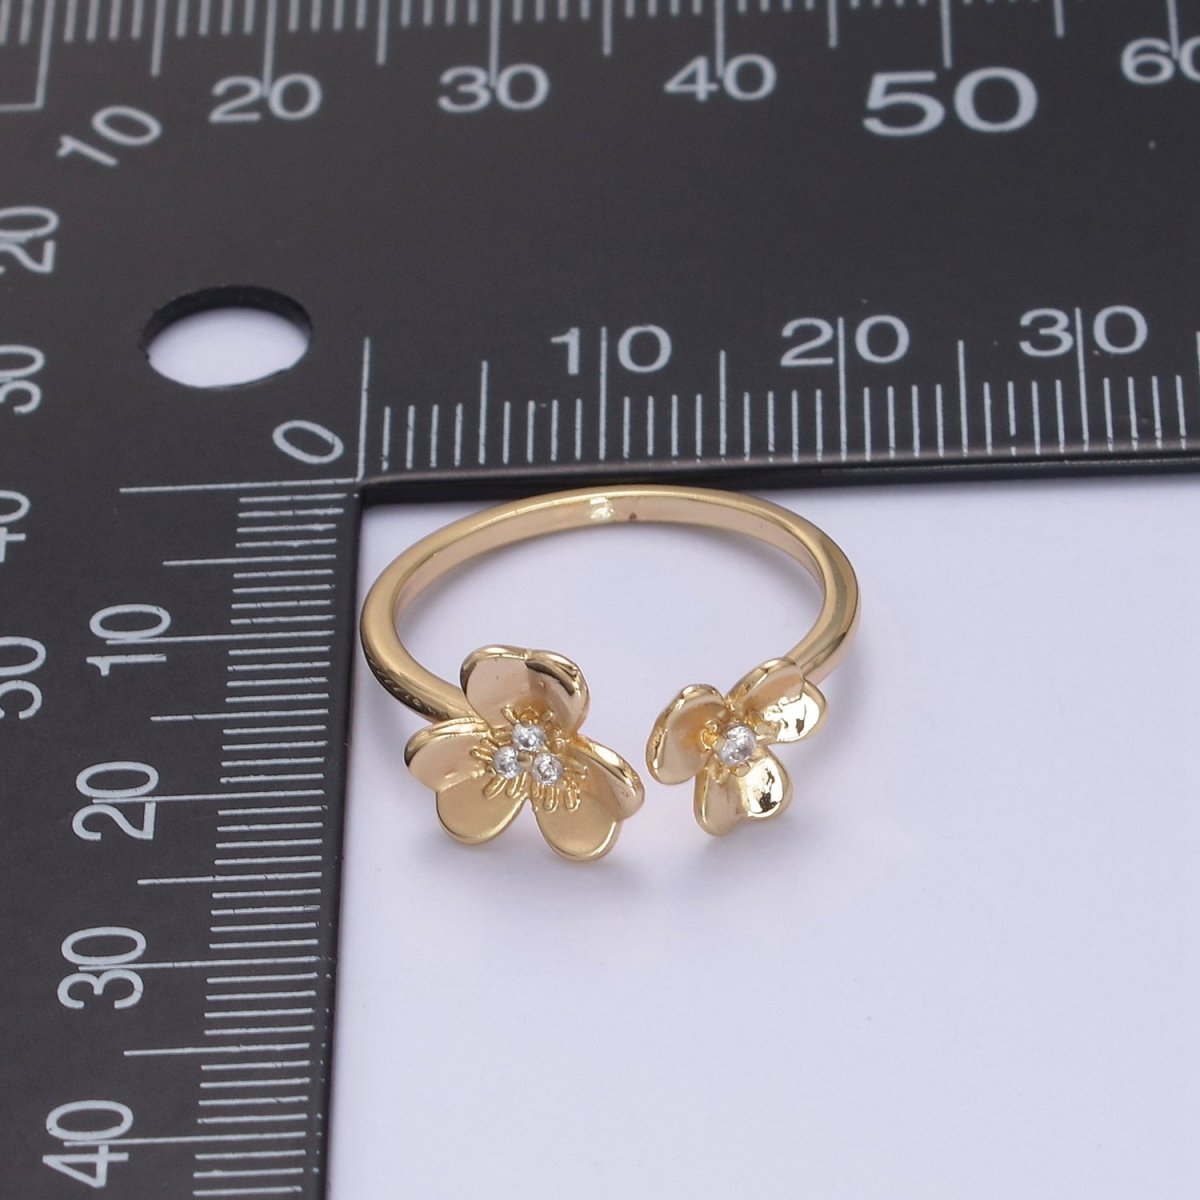 Dainty Daisy Ring in Gold / Silver Open Adjustable Flower Ring U-493 U-494 - DLUXCA